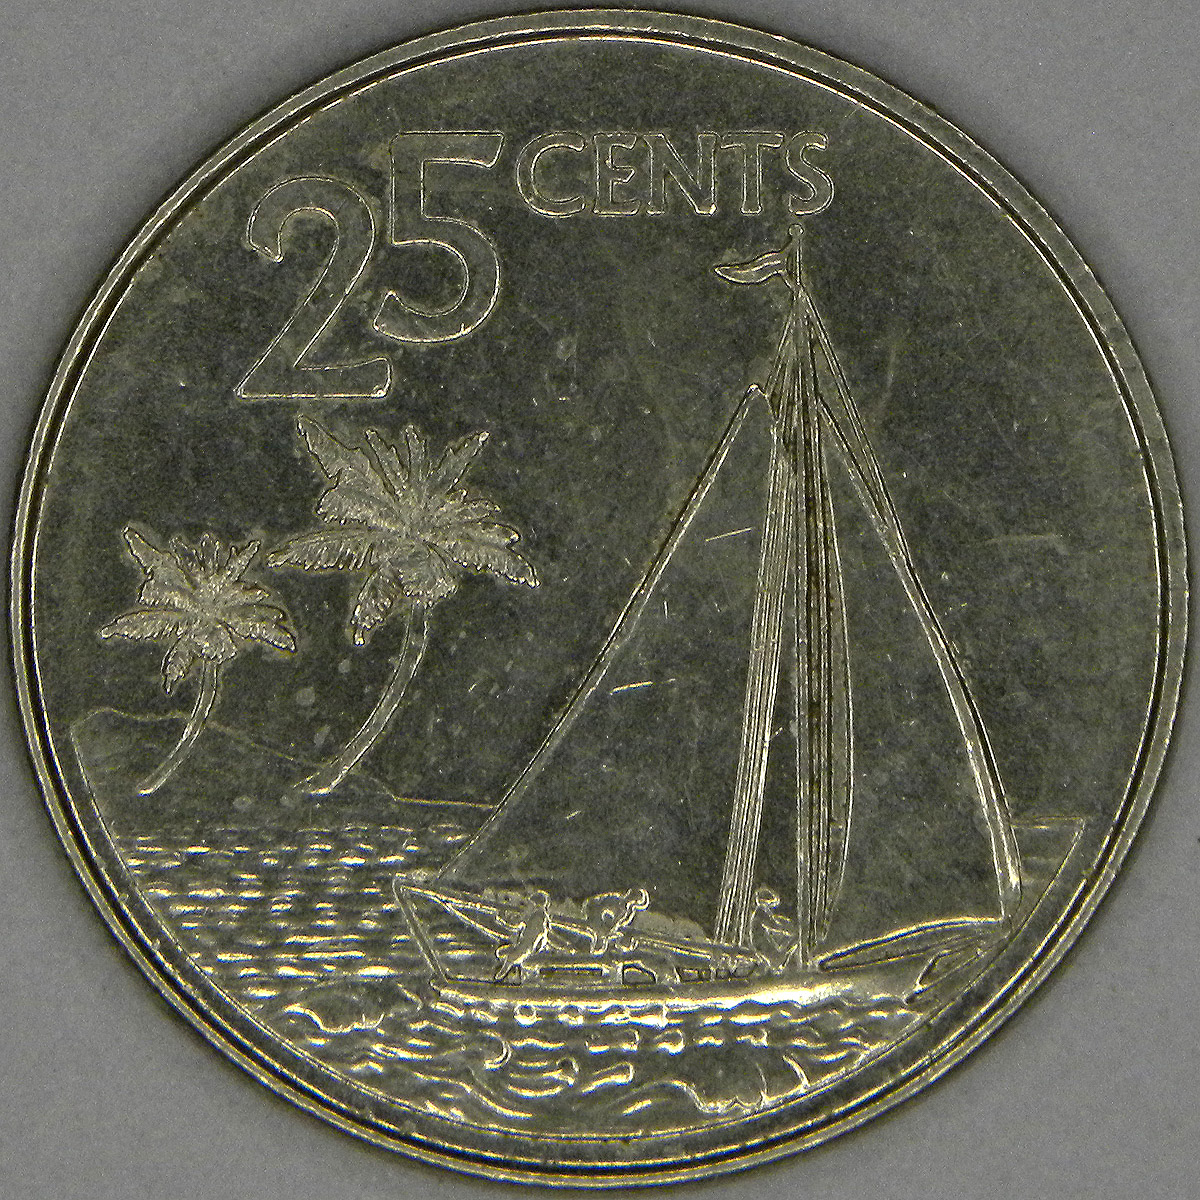 2007 Bahamas 25 cent coin (reverse)